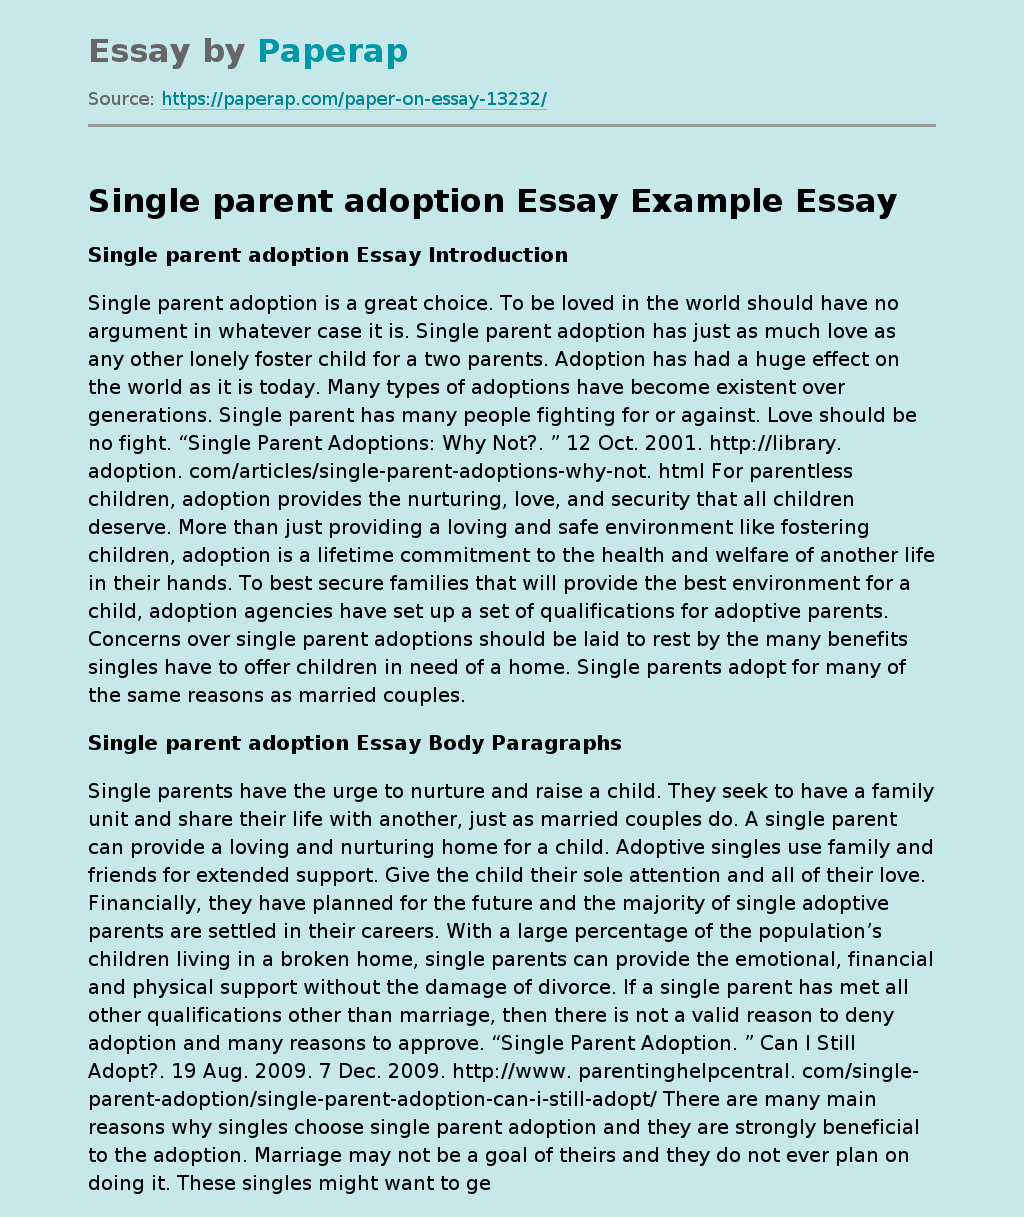 Single parent adoption Essay Example